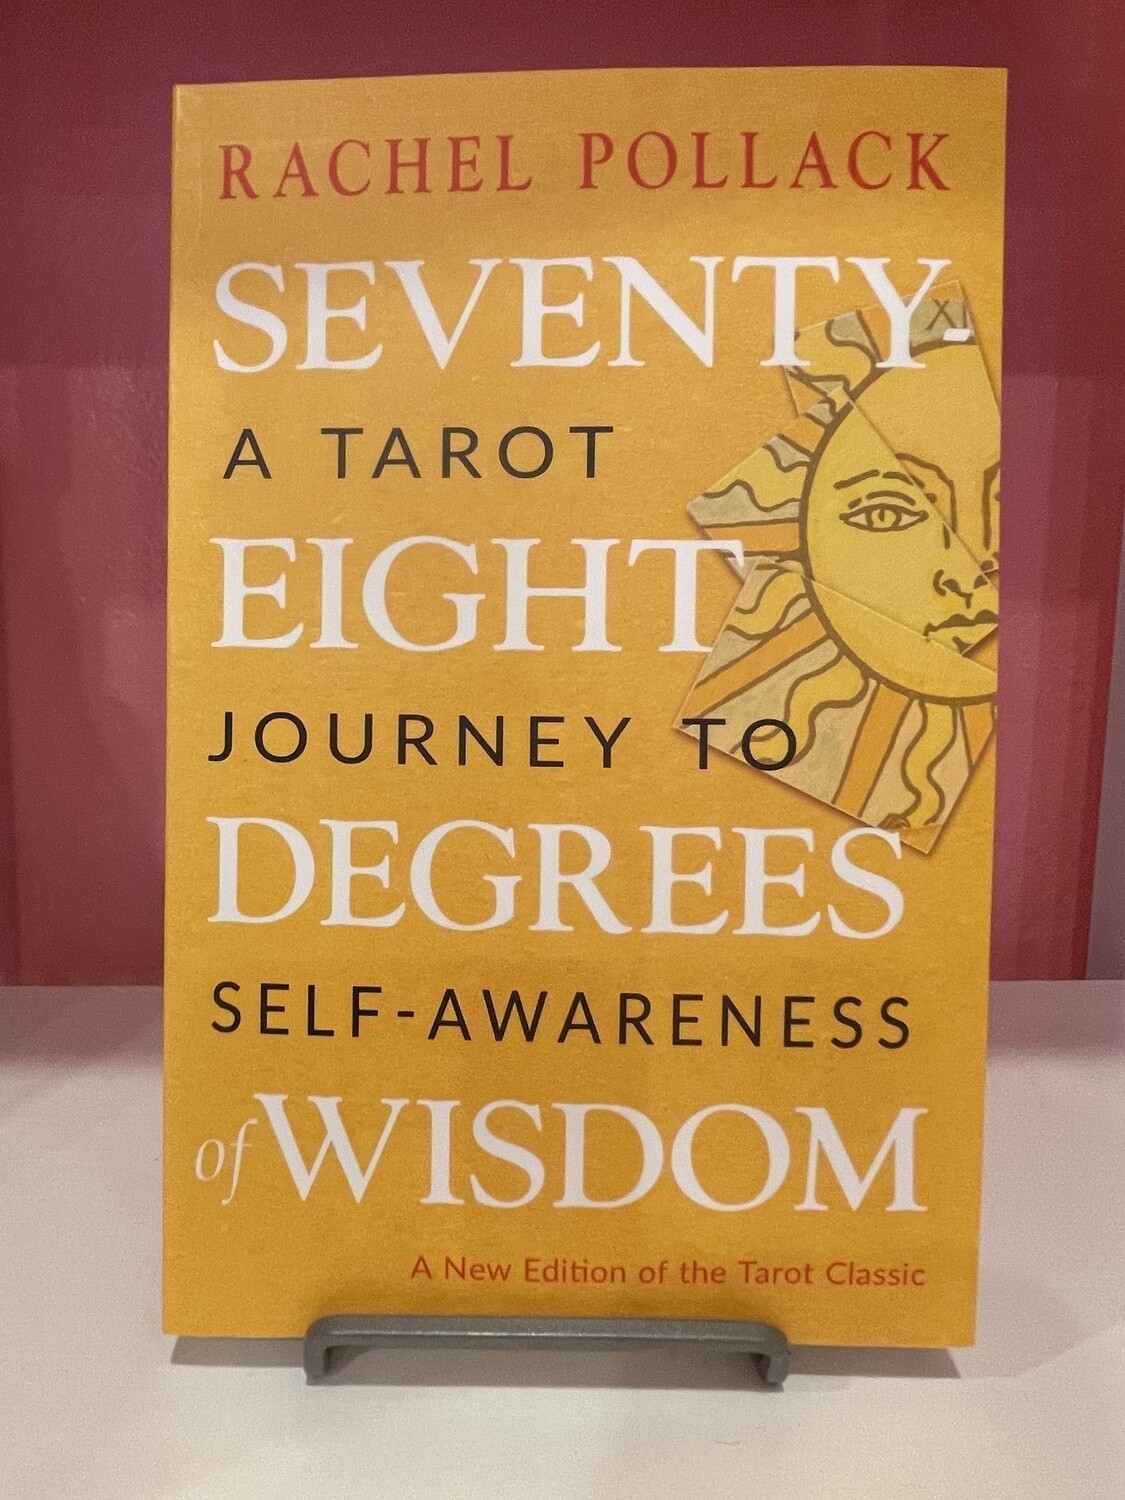 SEVENTYEIGHT DEGREES WISDOM (NEW)